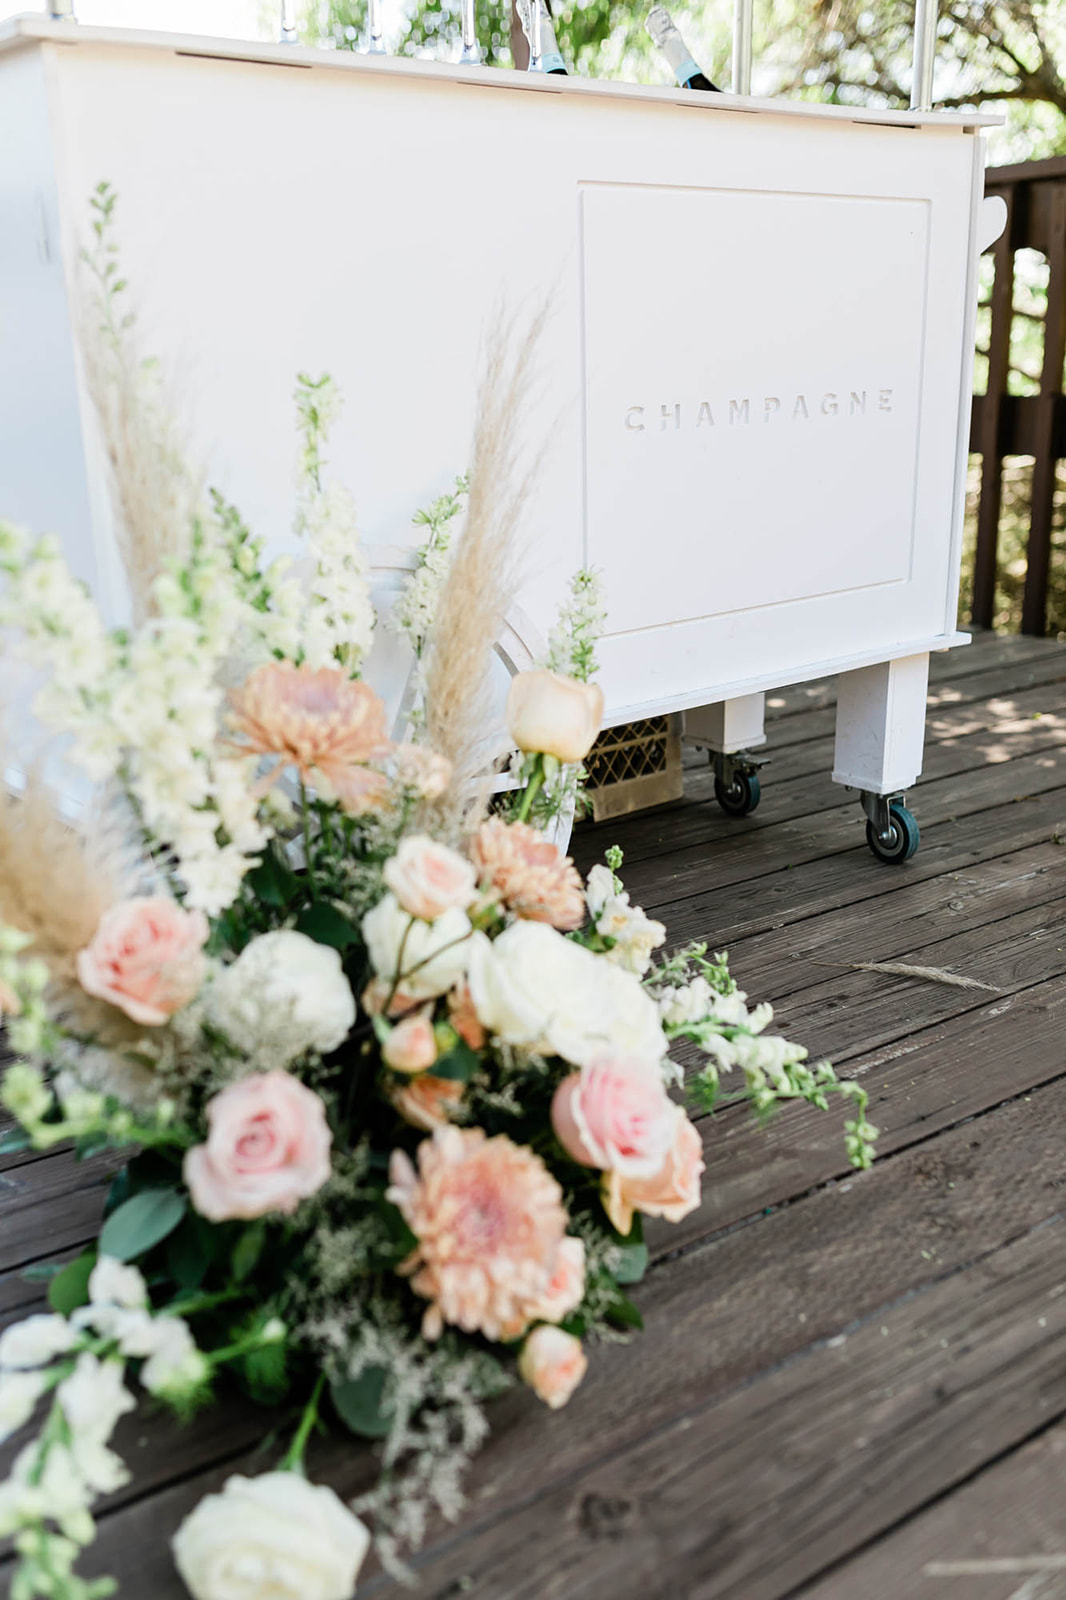 Serendipity garden wedding champagne cart